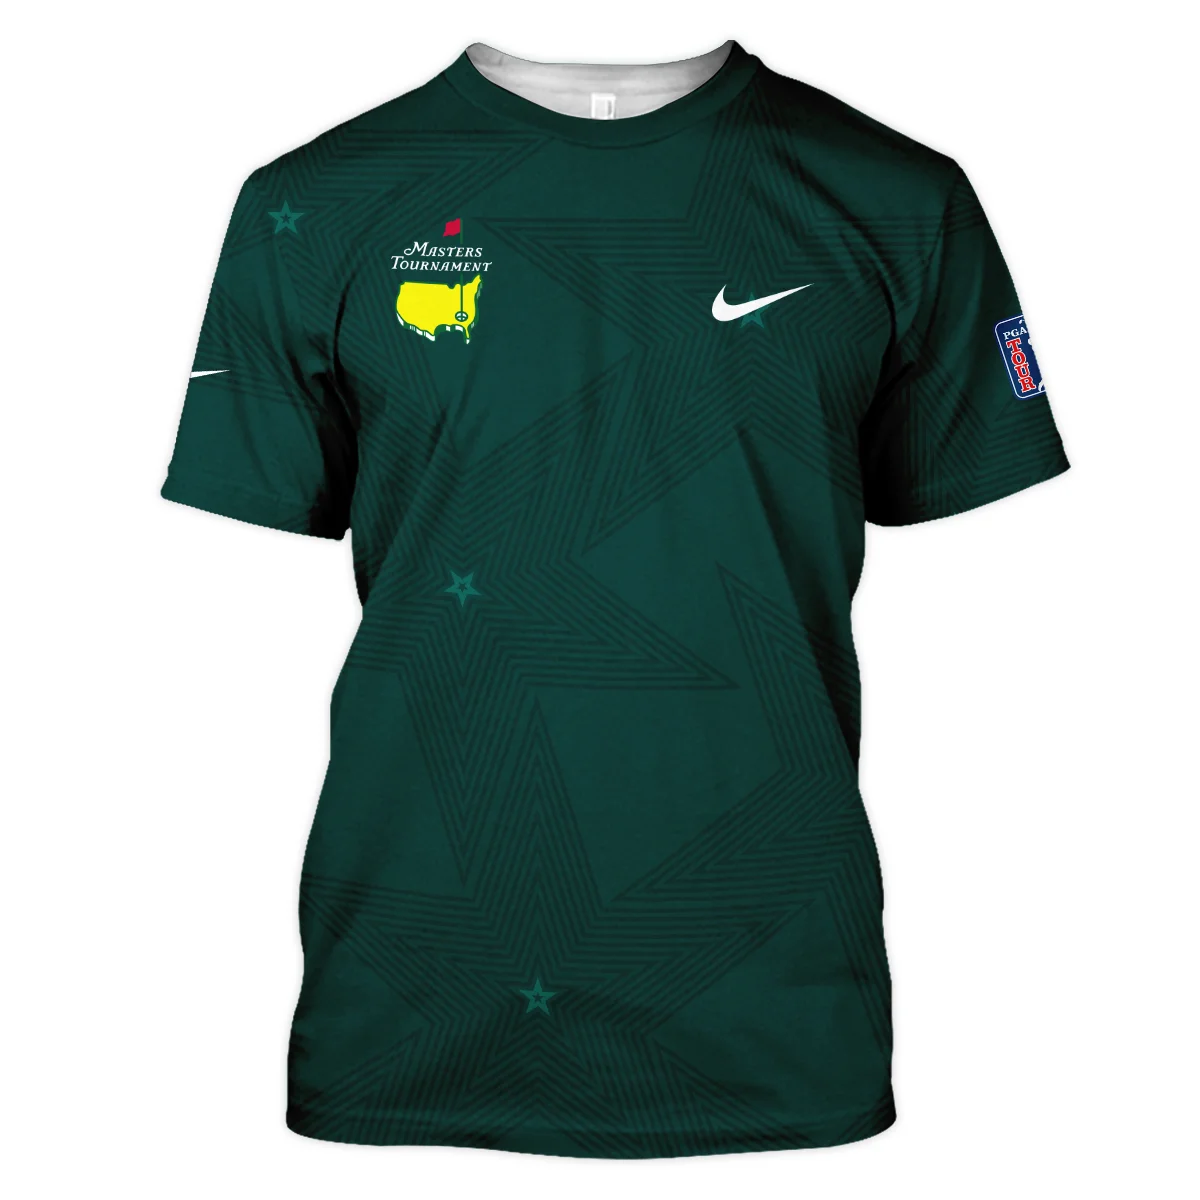 Golf Pattern Stars Dark Green Masters Tournament Nike Unisex T-Shirt Style Classic T-Shirt